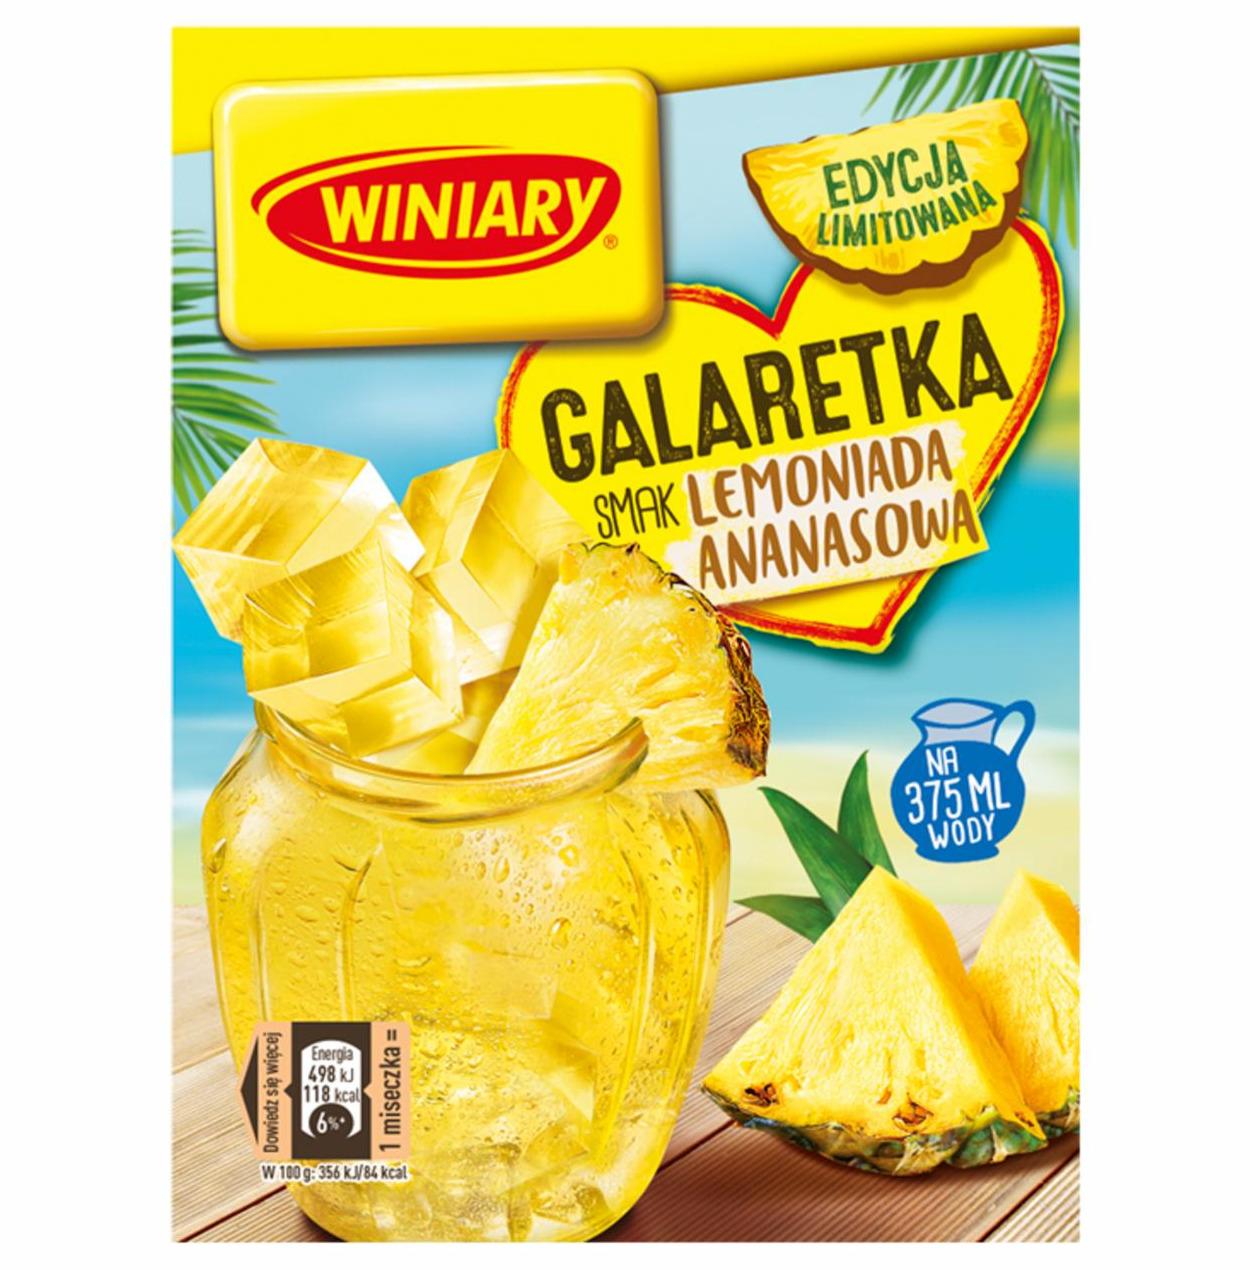 Fotografie - Galaretka smak lemoniada ananasowa Winiary